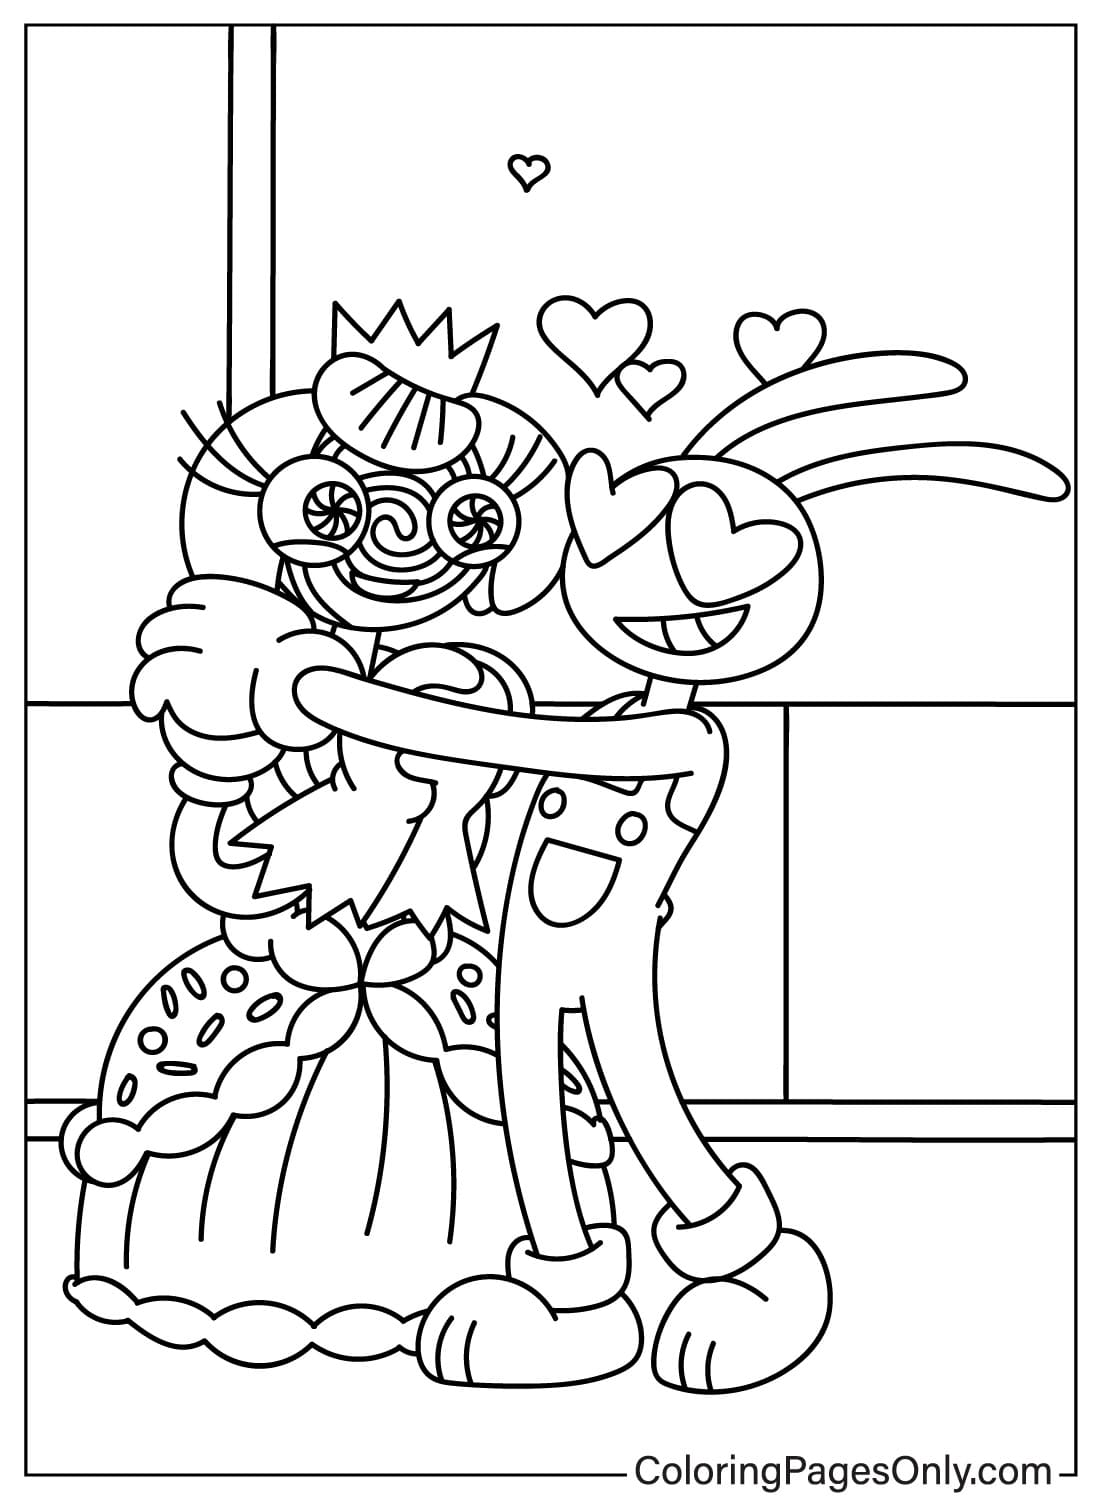 Página para colorir da Princesa Loolilalu e Jax de Jax